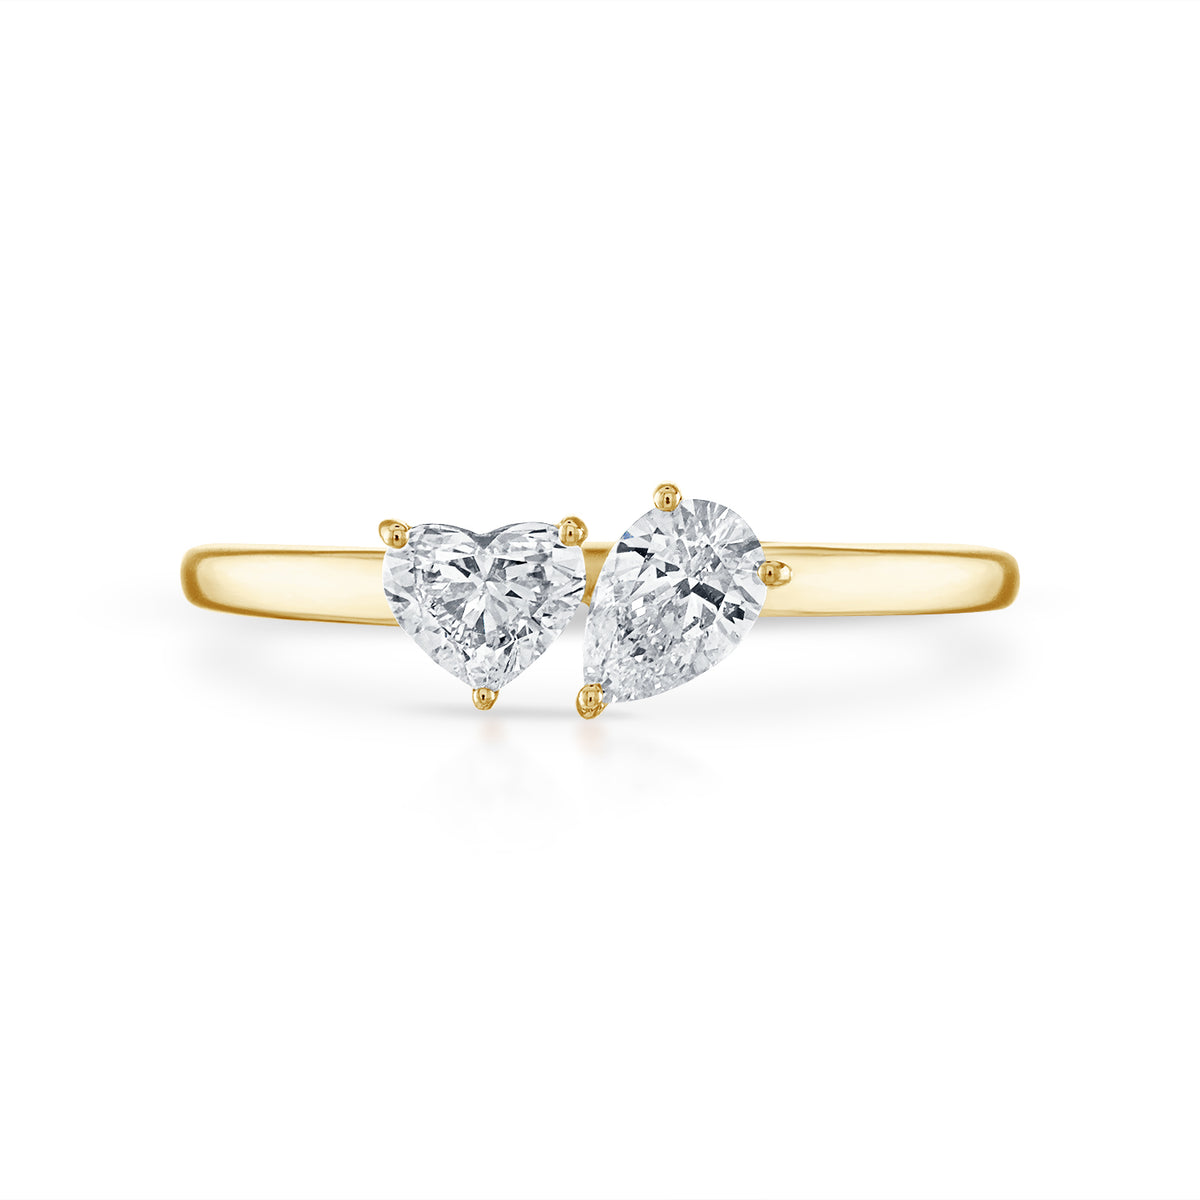 Robert Pelliccia Emerald and Pear Shaped Diamond Toi et Moi Ring